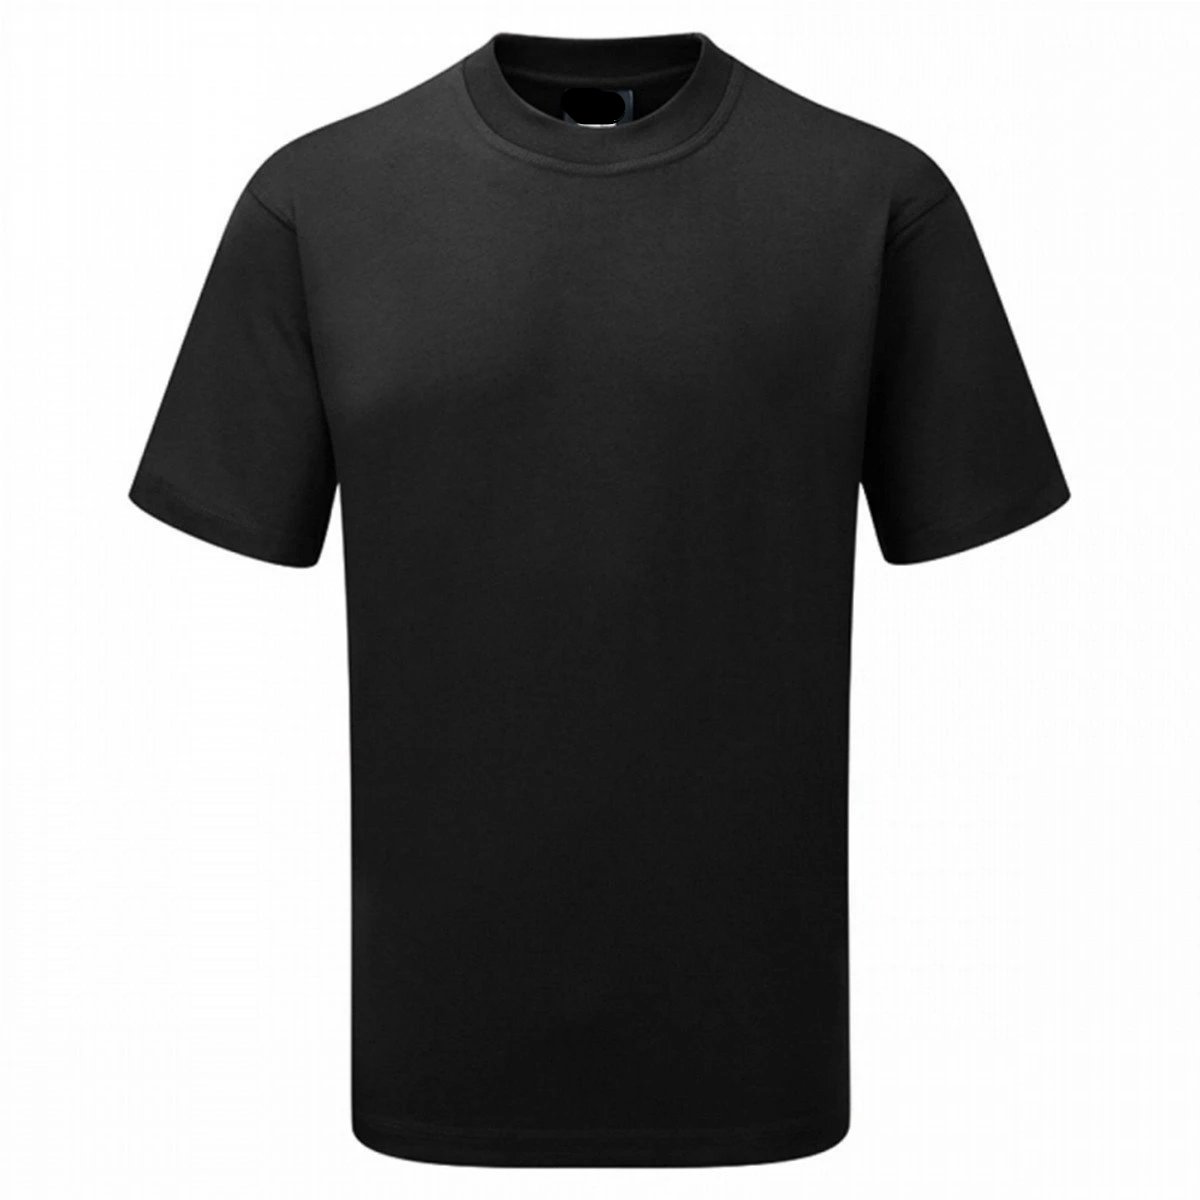 Jackson Solid Color Short Sleeve Tee Shirt Men's Tee Shirt Image Black S 